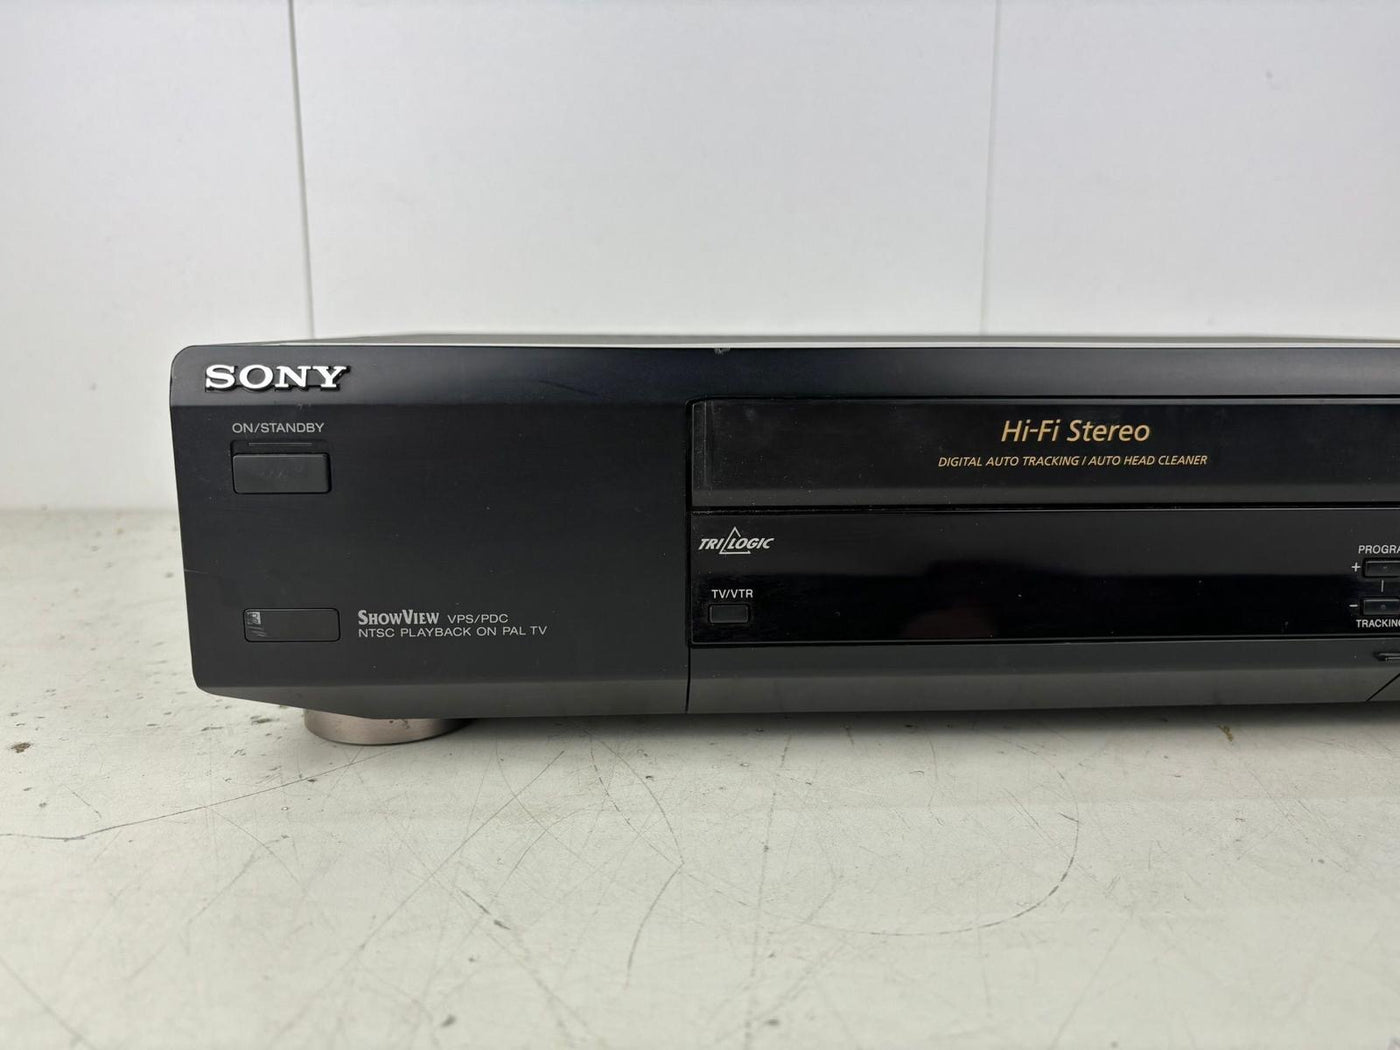 Sony SLV-E720 Video Cassette Recorder VHS | Goed beschrijving lezen!